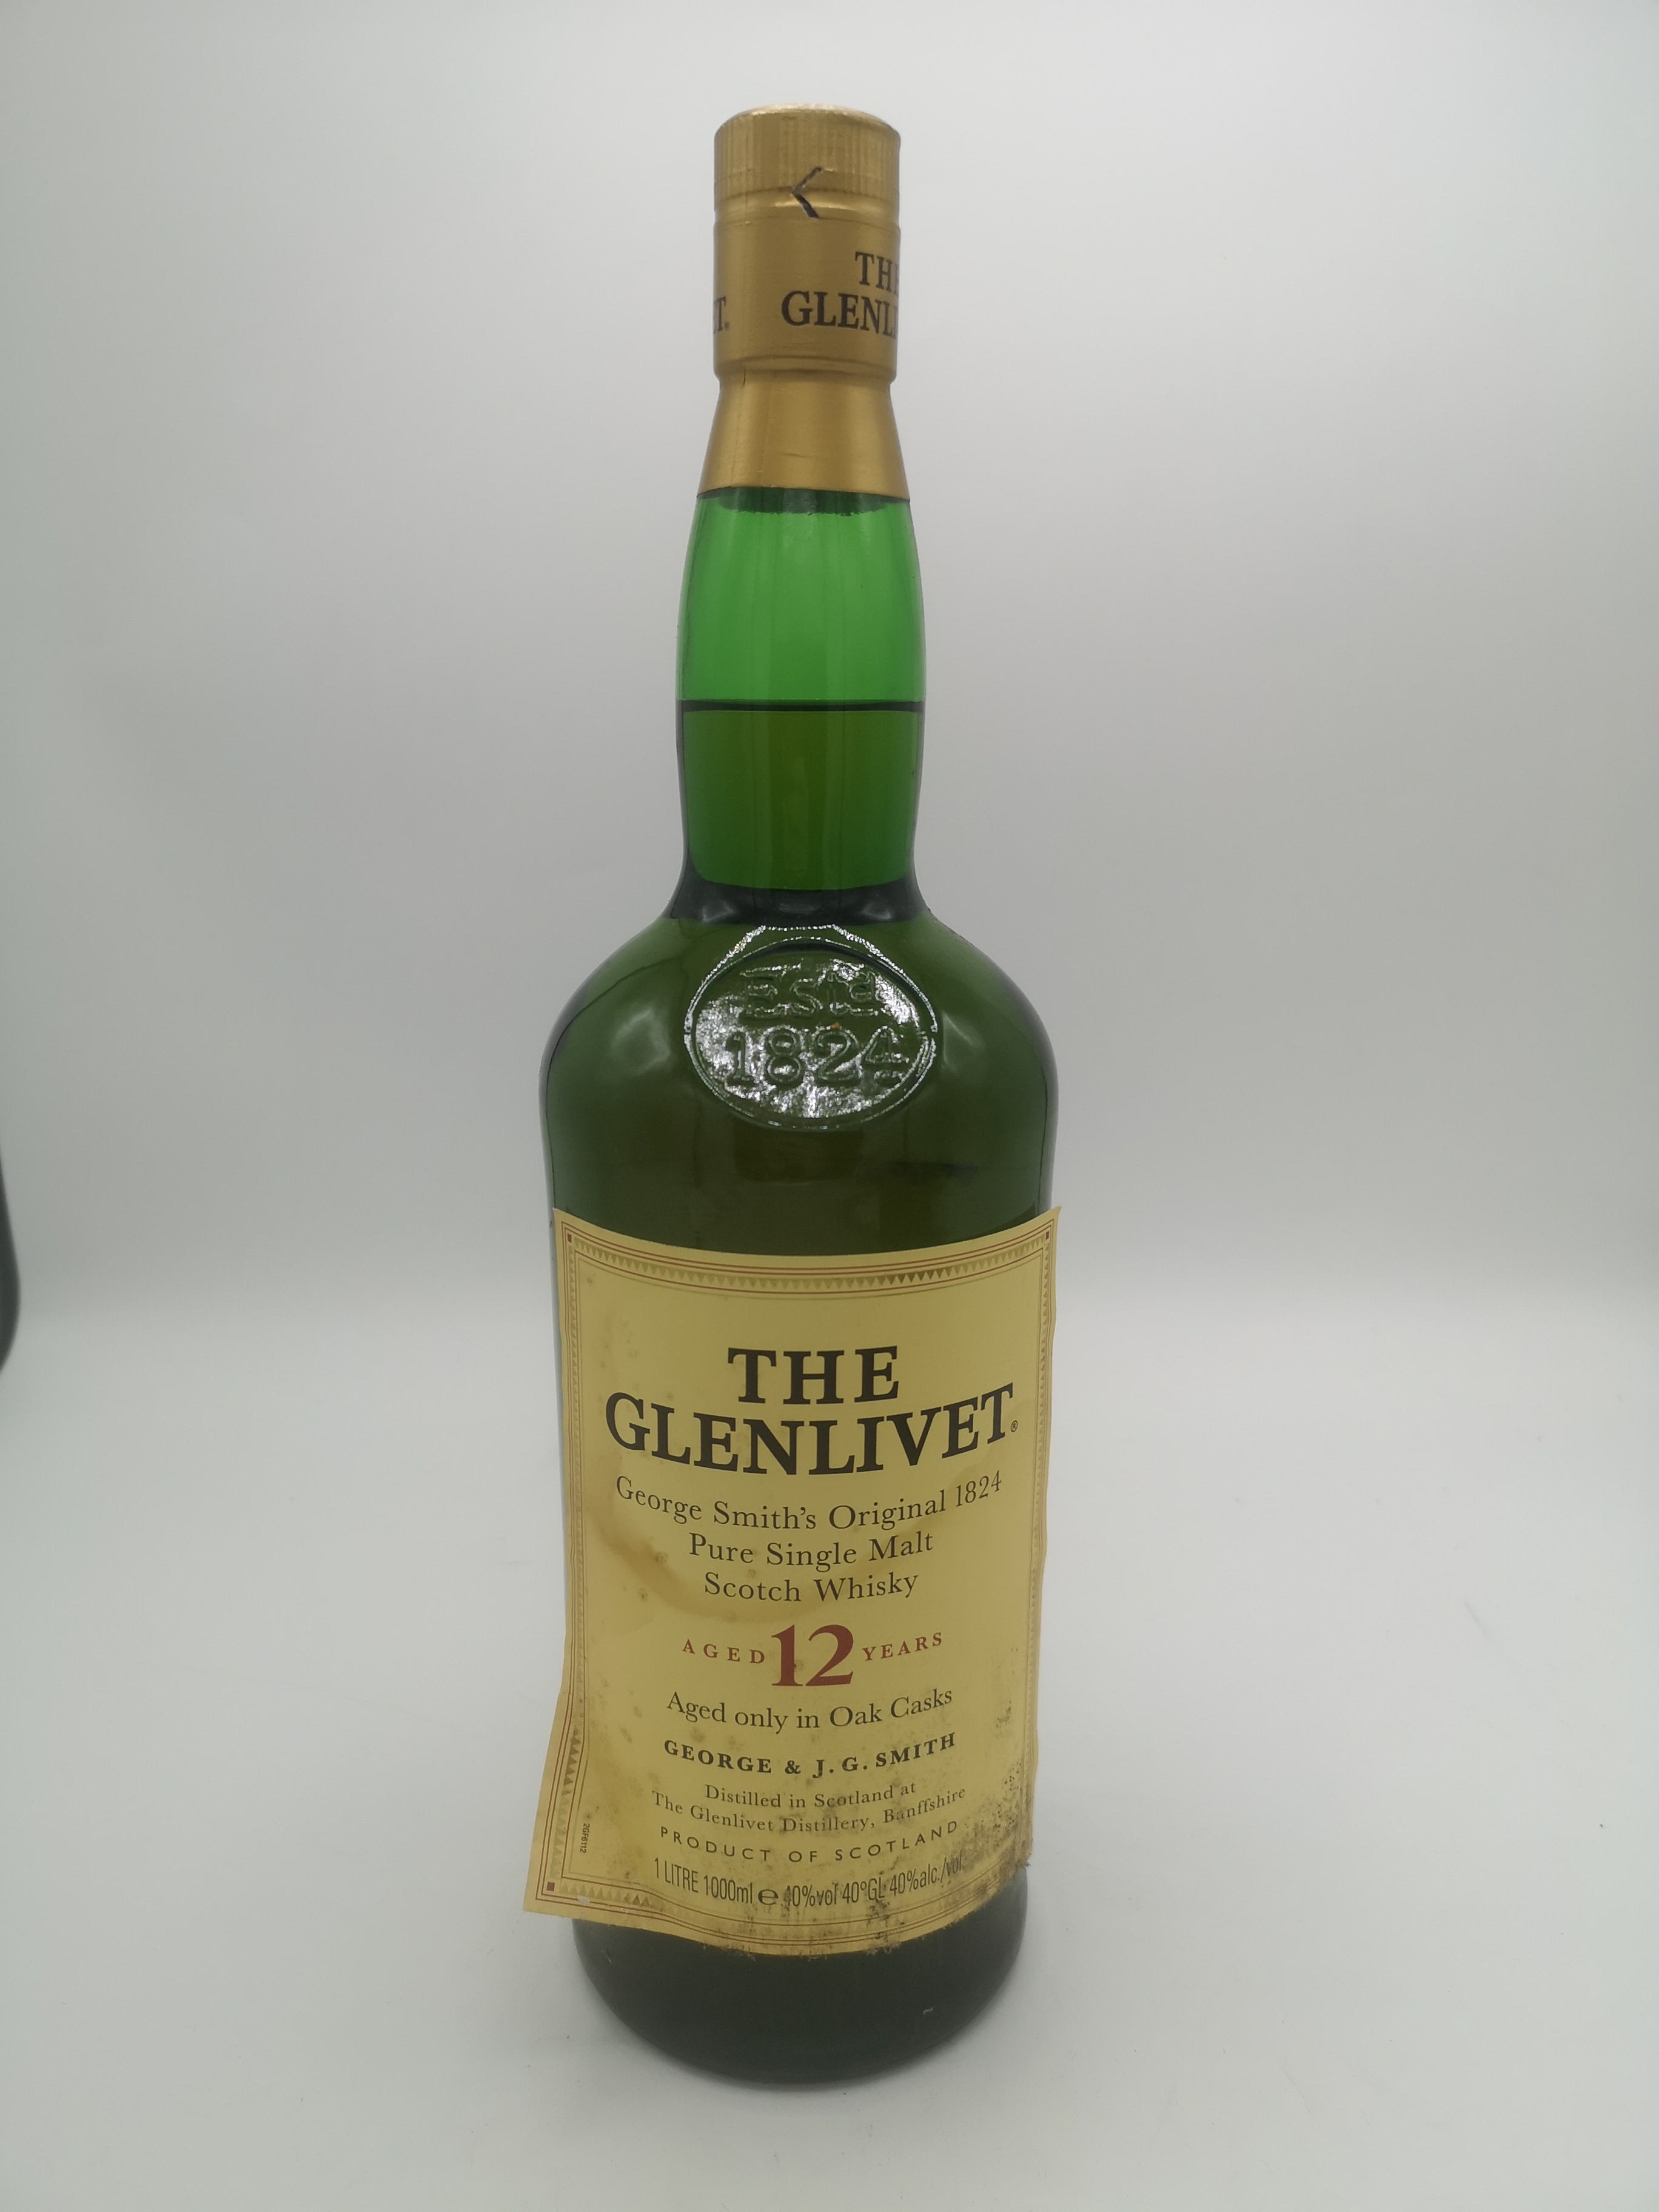 The Glenlivet, 1l pure single malt Scotch whisky